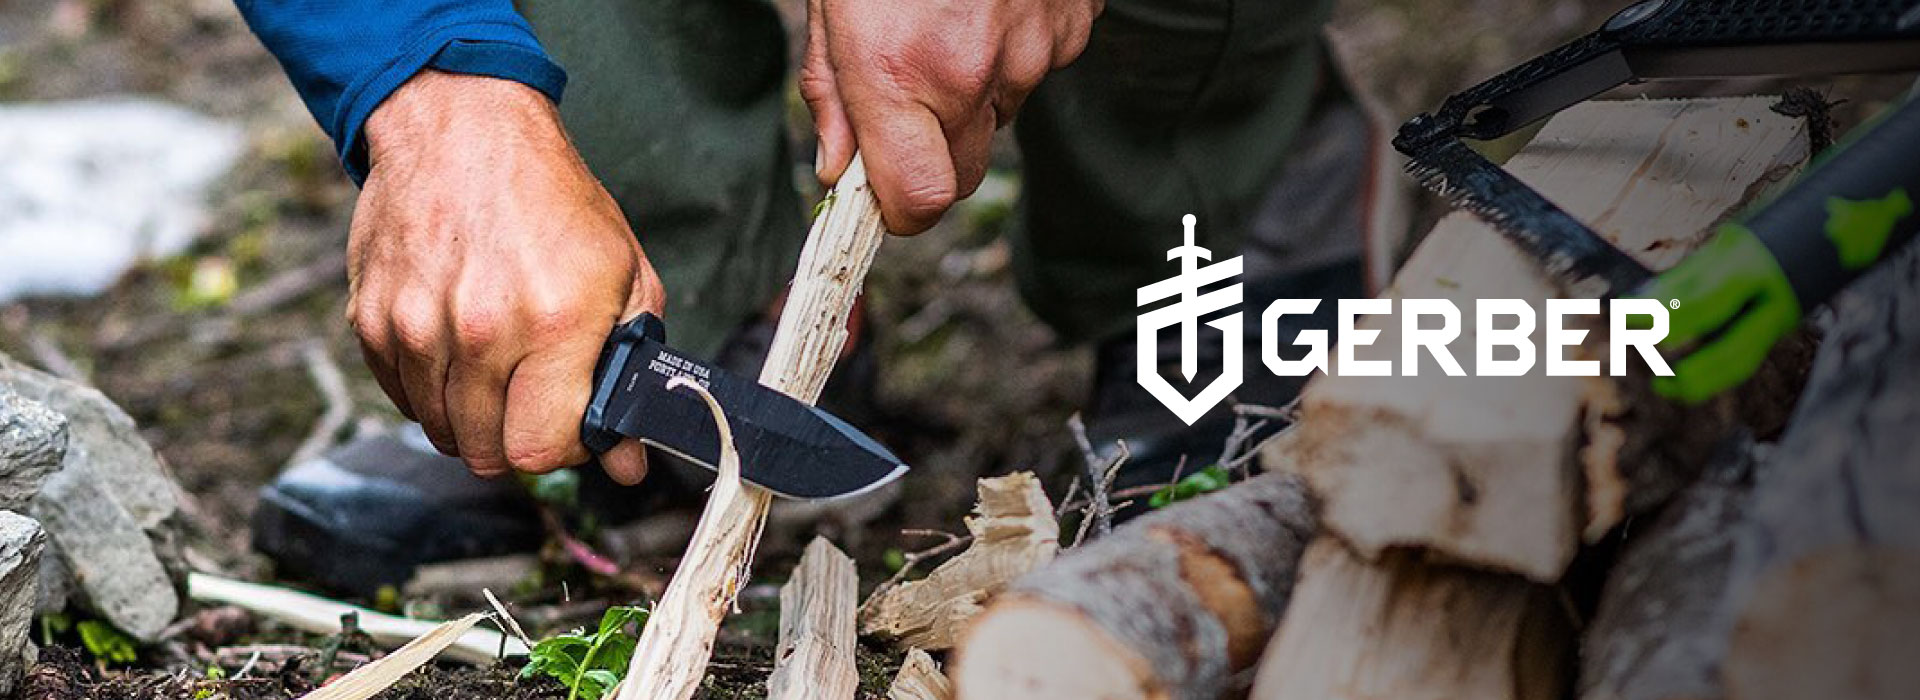 En Tatoo encuentras cuchillos, multiherramientas, parang, machetes, navajas, hachas, palas, paraframe, remix, knifes de la marca Gerber.